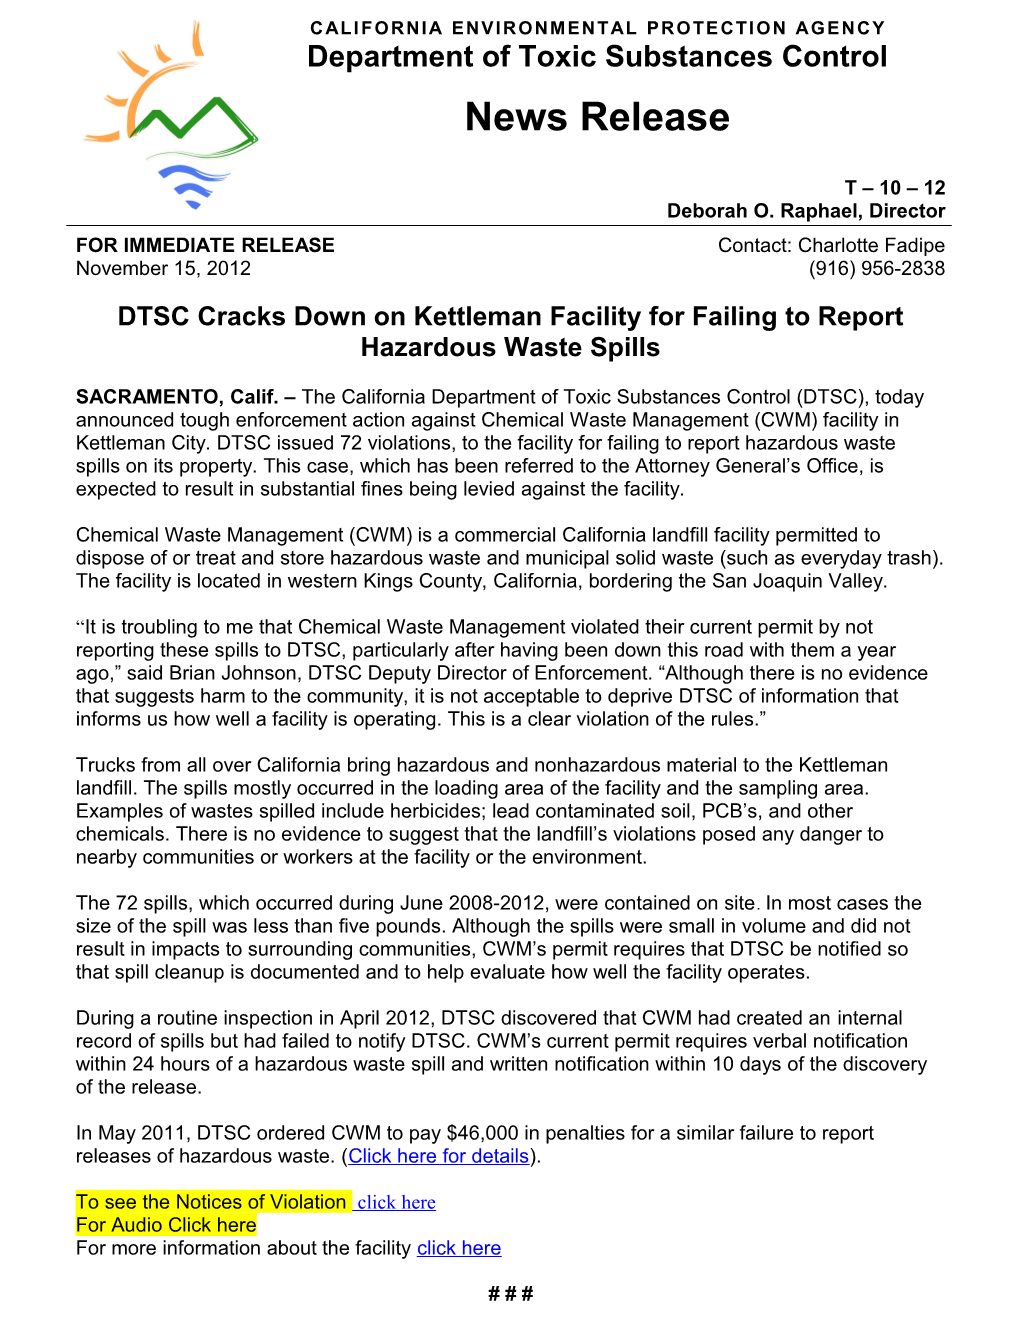 DTSC Cracks Down on Kettleman Facility for Failing to Report Hazardous Waste Spills